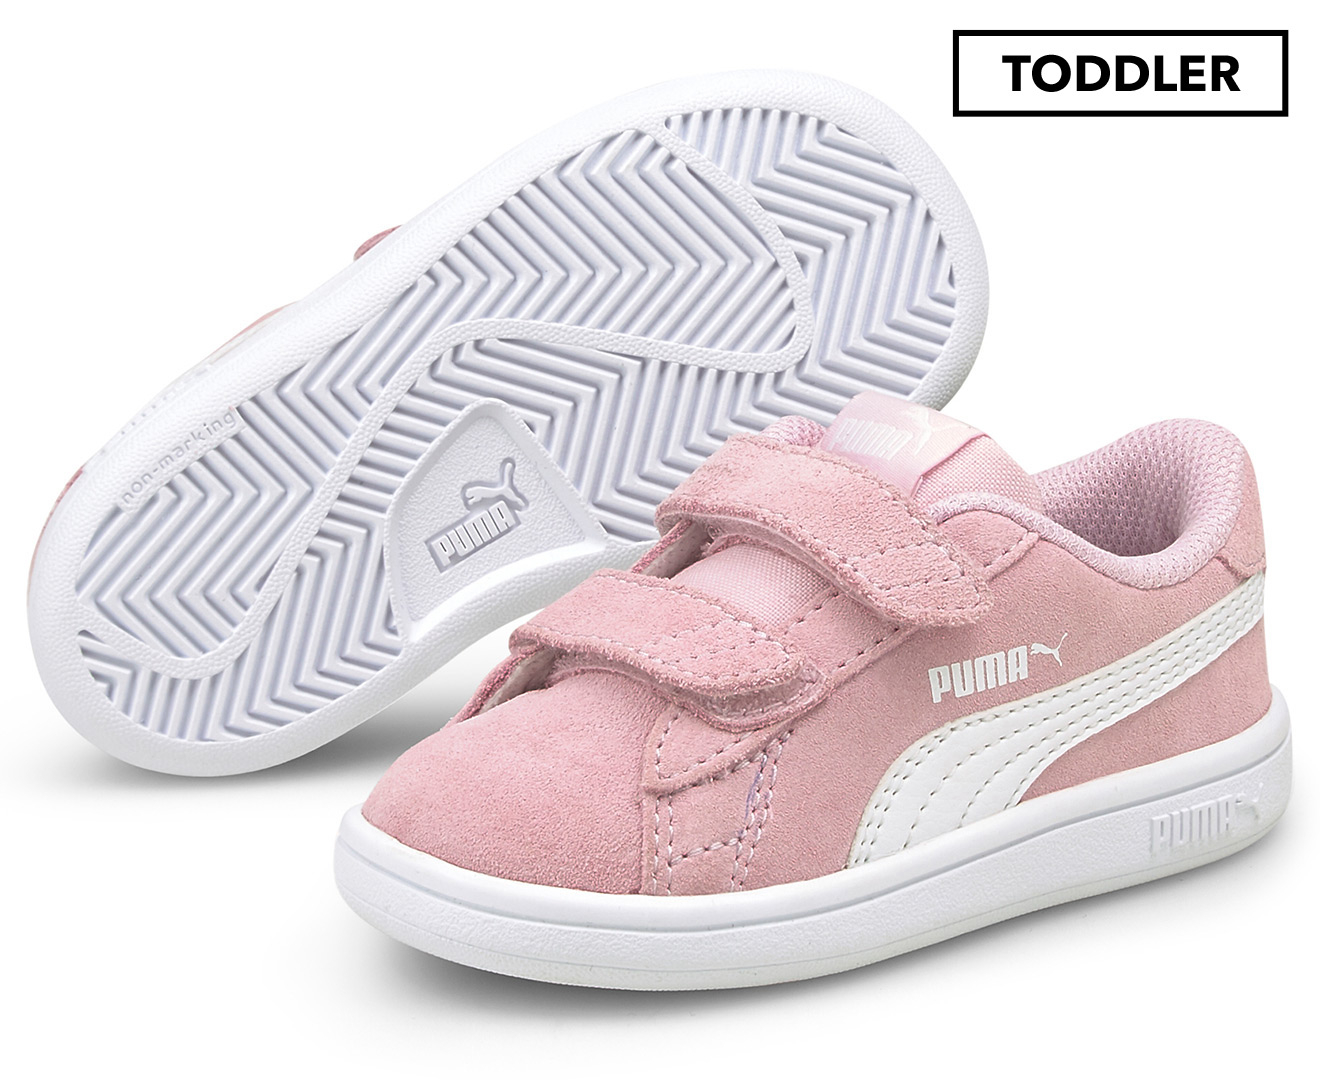 Puma Toddler Girls' Smash V2 Suede Sneakers - Pink Lady/Puma White